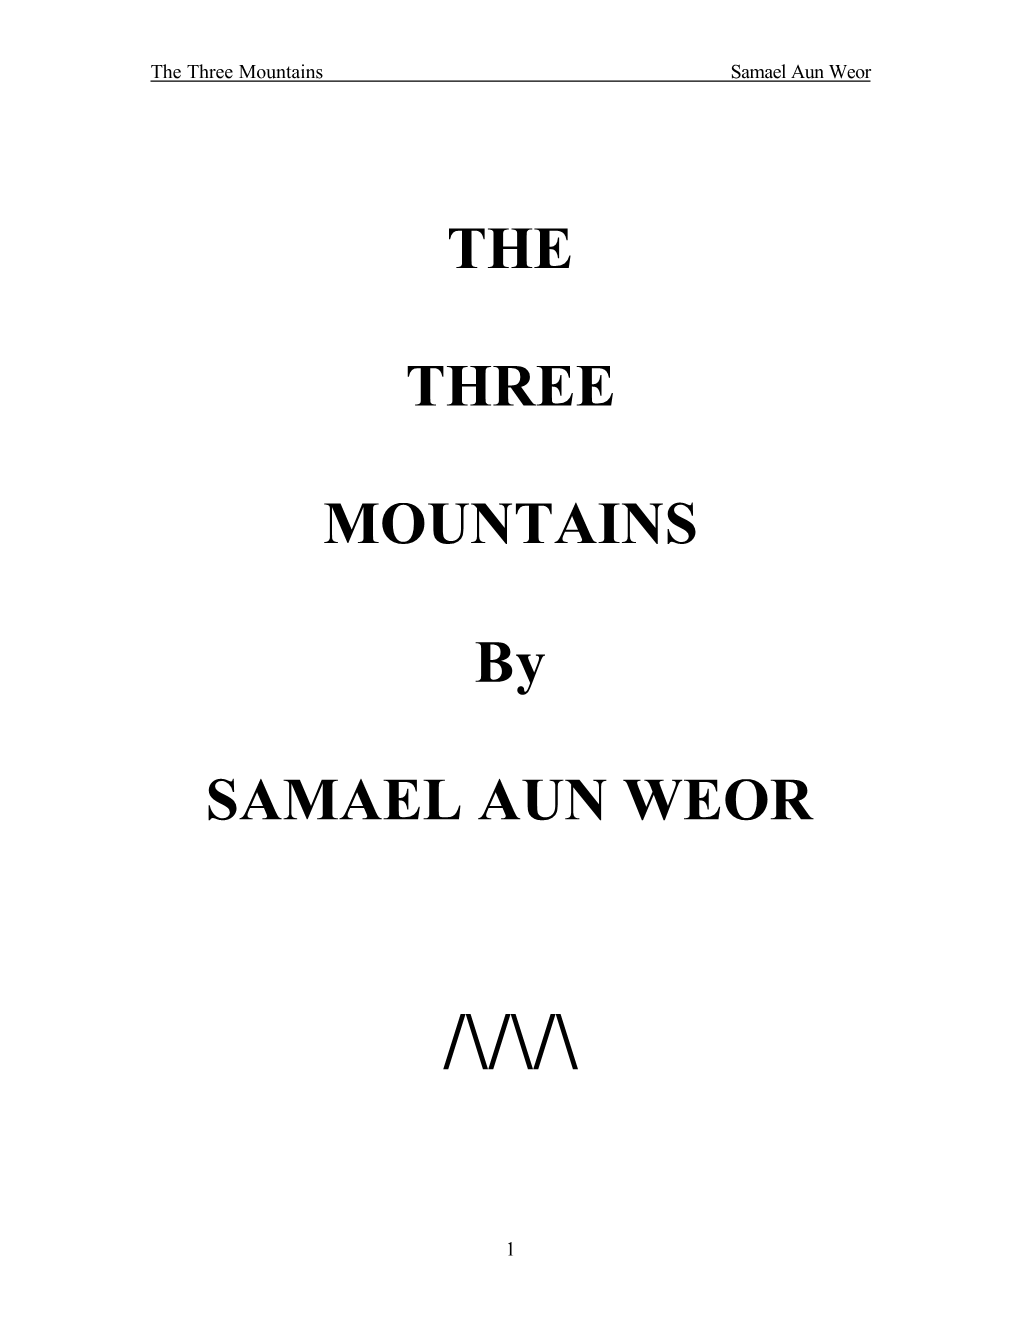 THE THREE MOUNTAINS by SAMAEL AUN WEOR